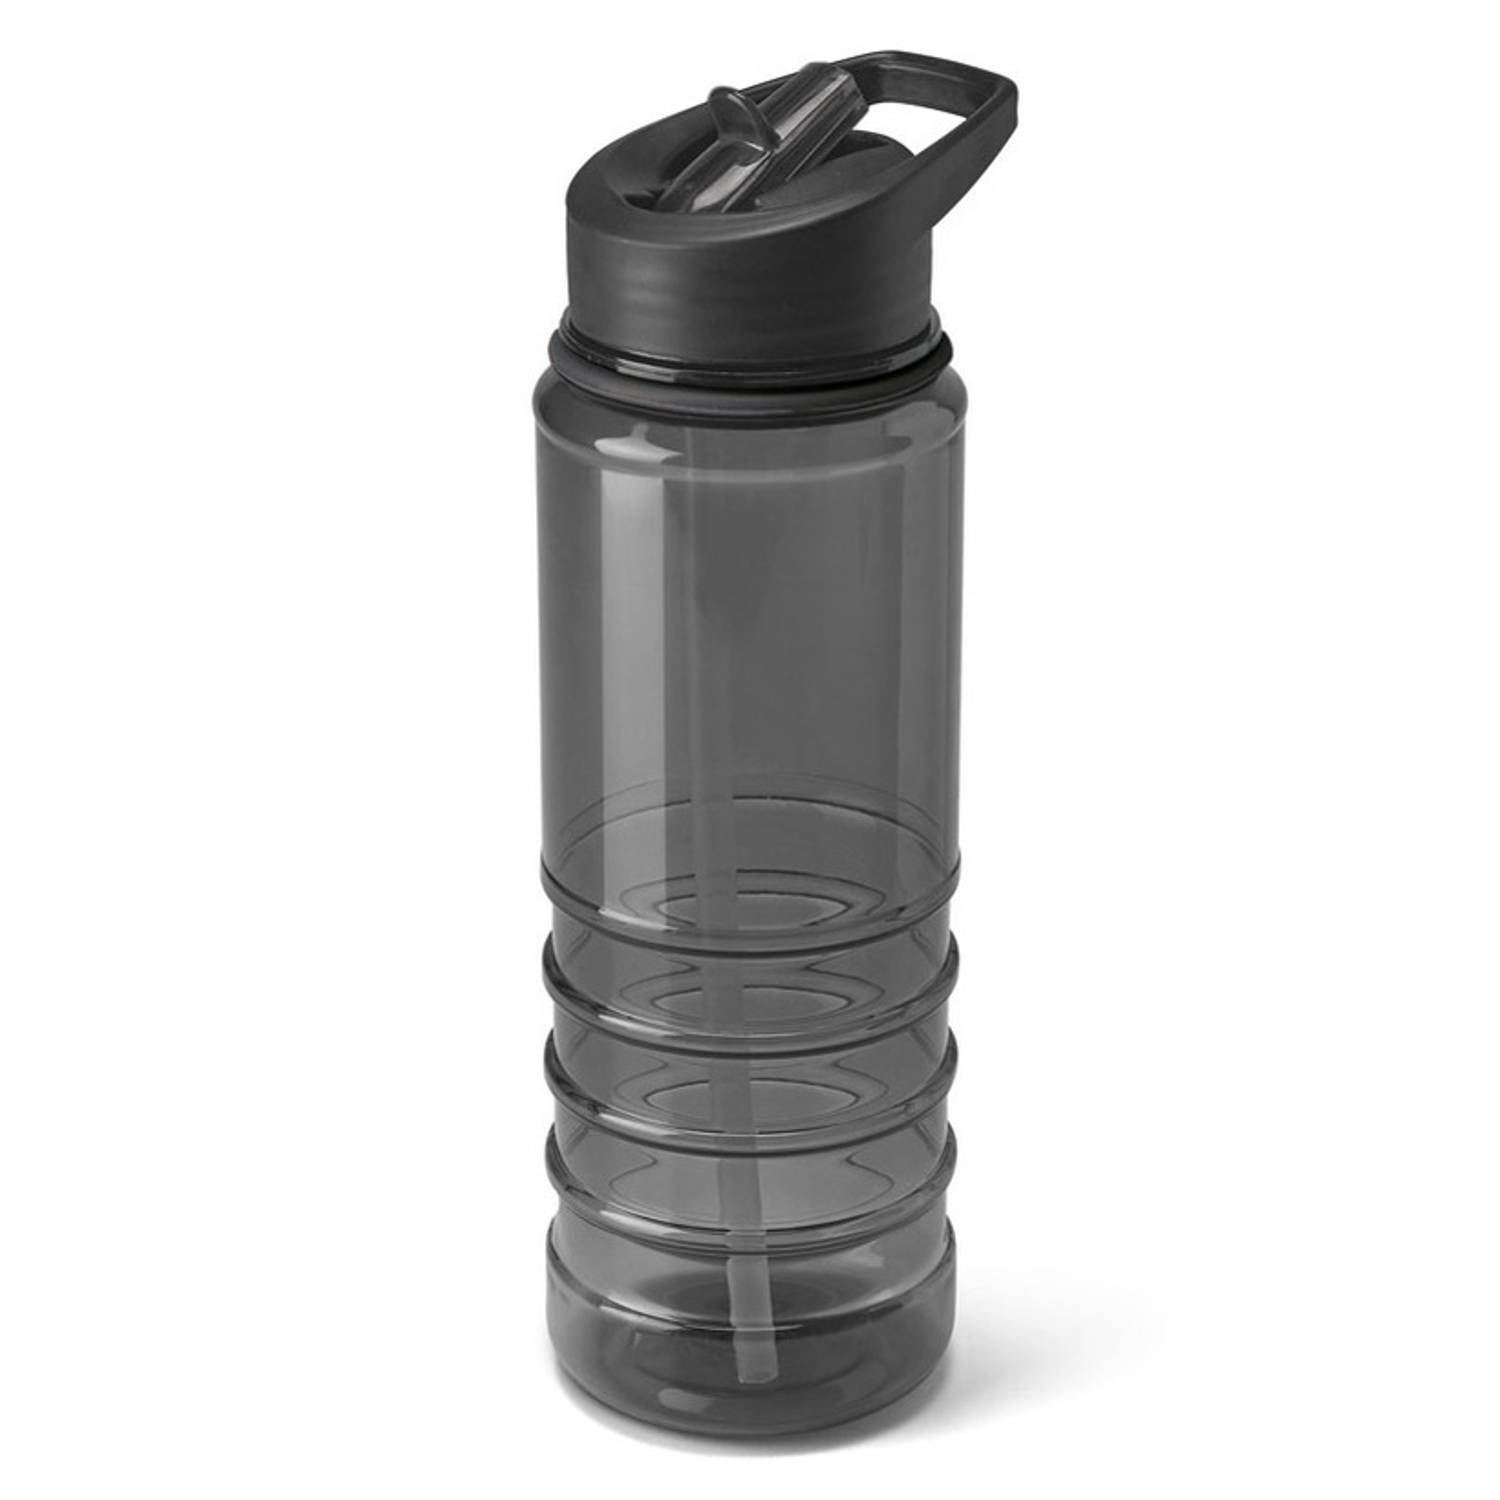 Kunststof waterfles/drinkfles transparant zwart met rietje 650 ml - Sportfles - Bidon